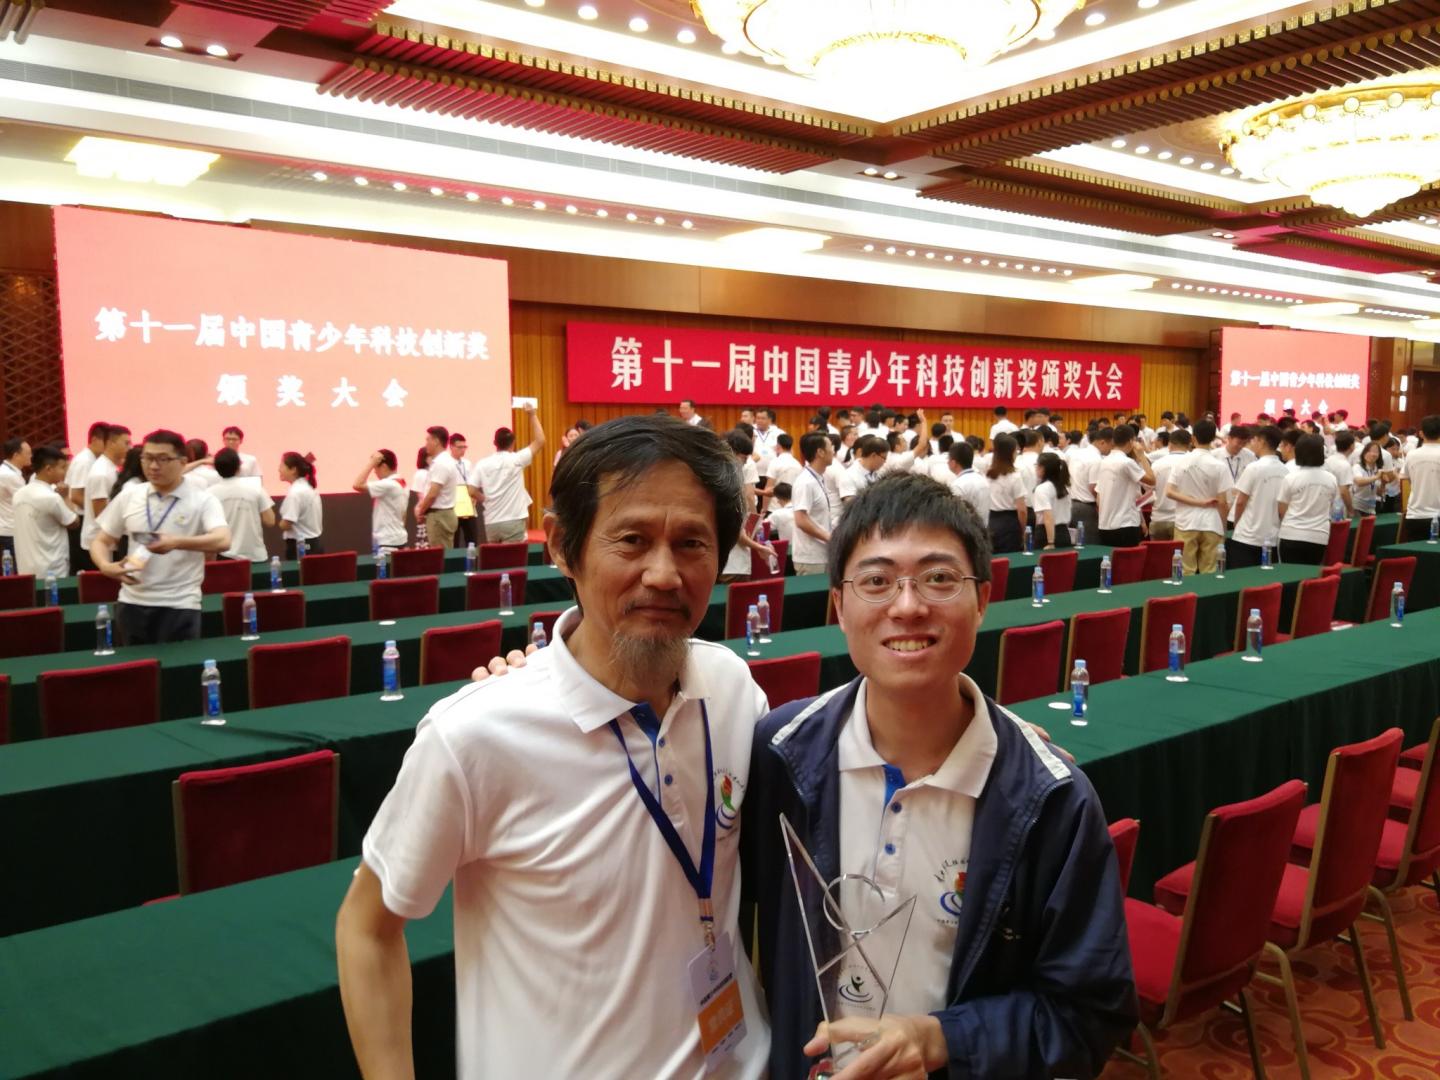 HKU Medical Student Receives Innovation Award in China